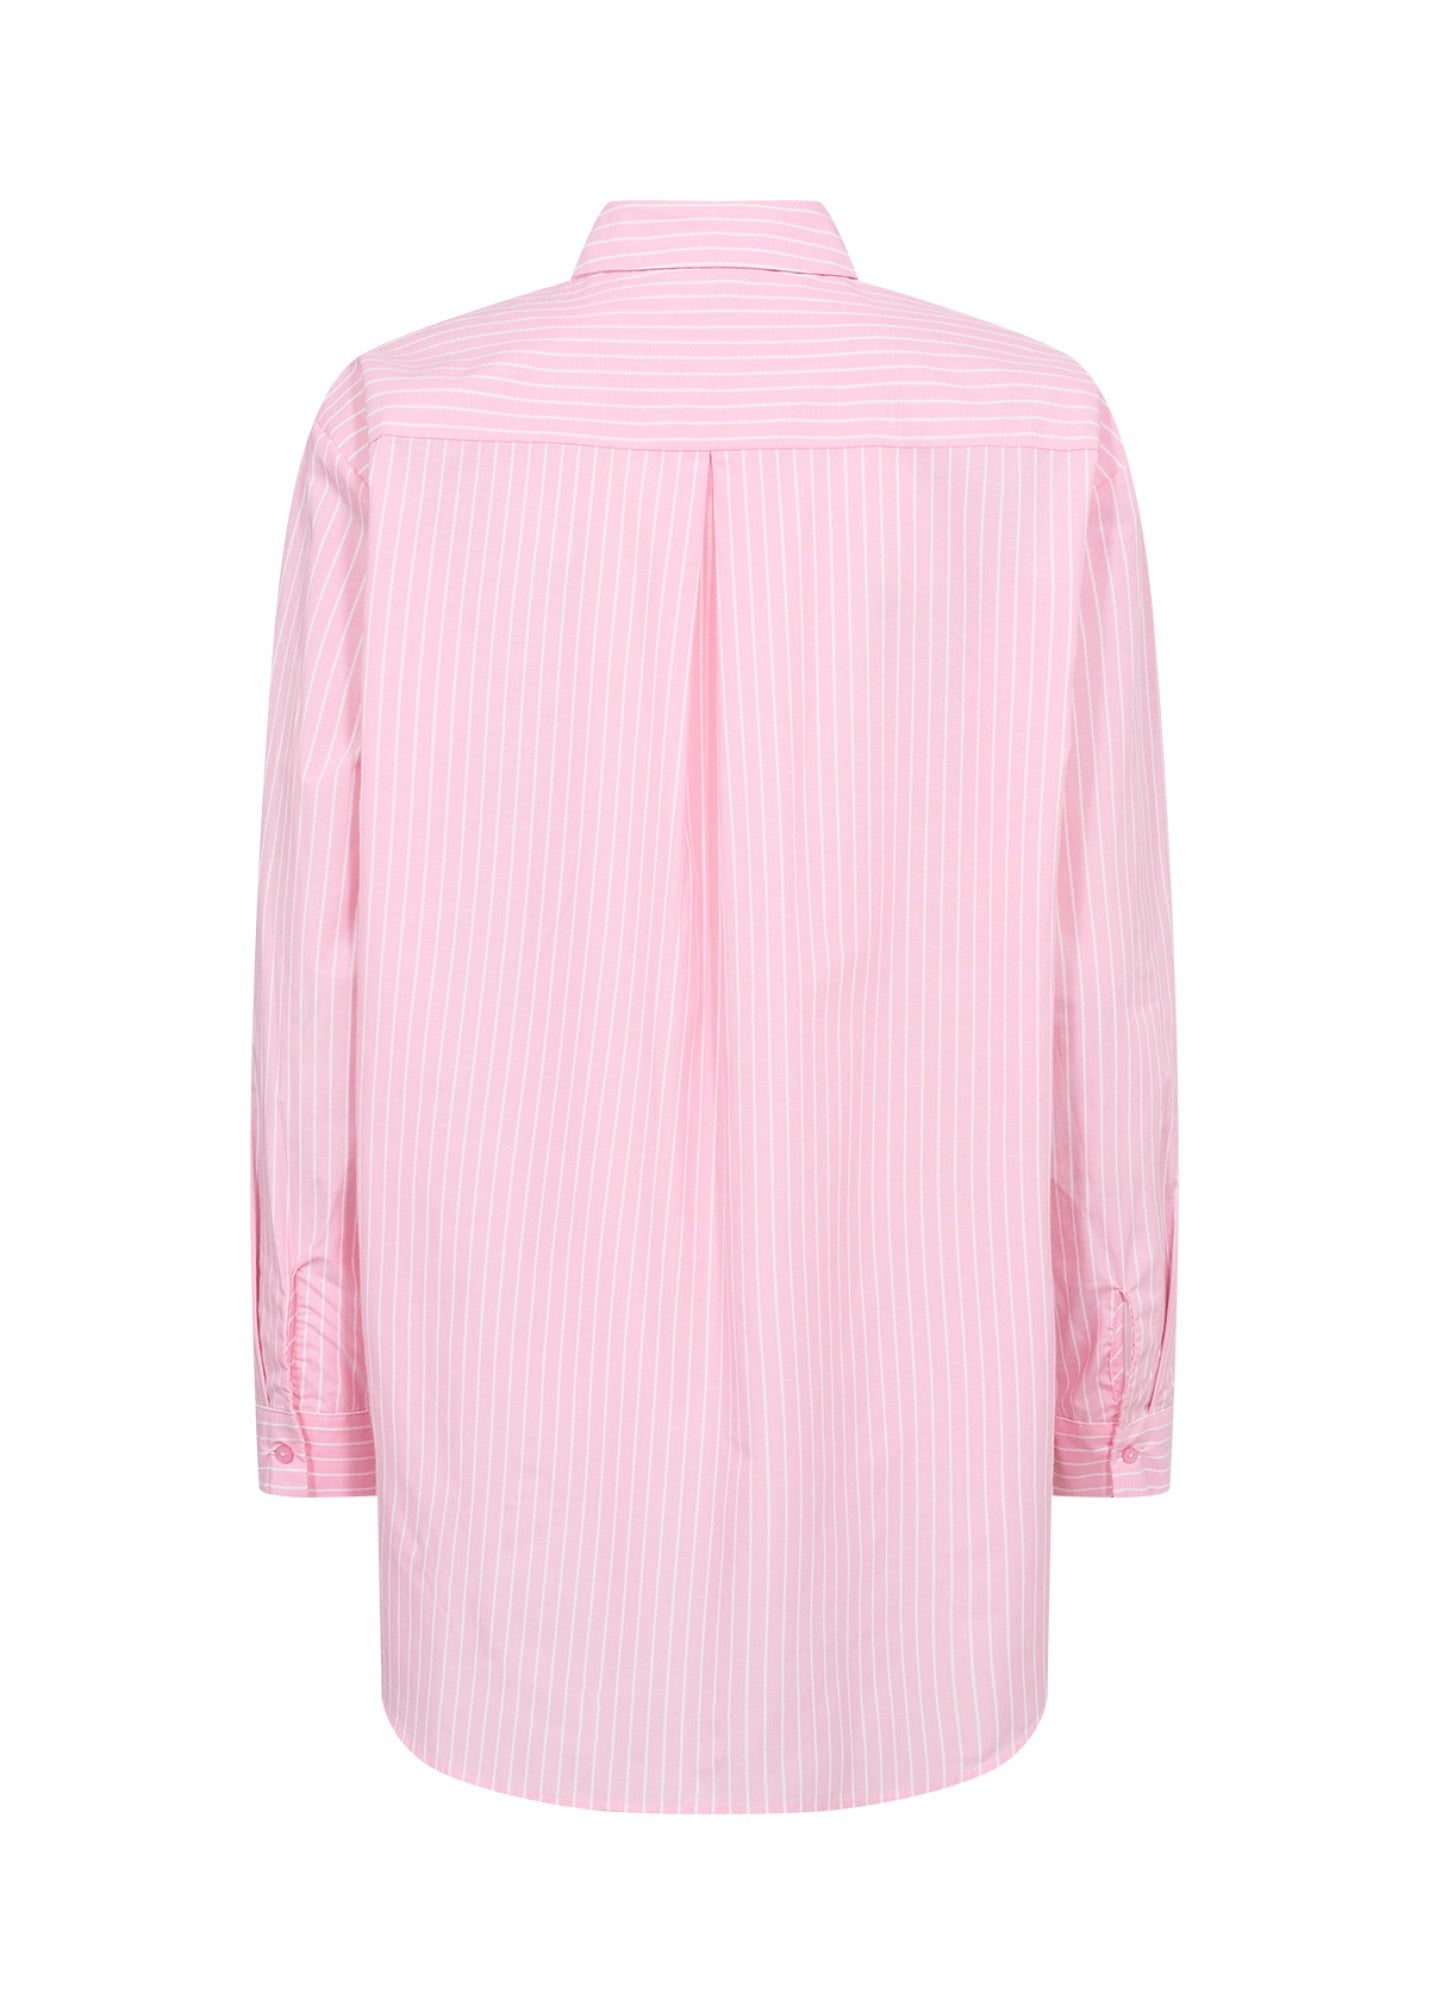 Soya Concept Stripe Shirt Pink